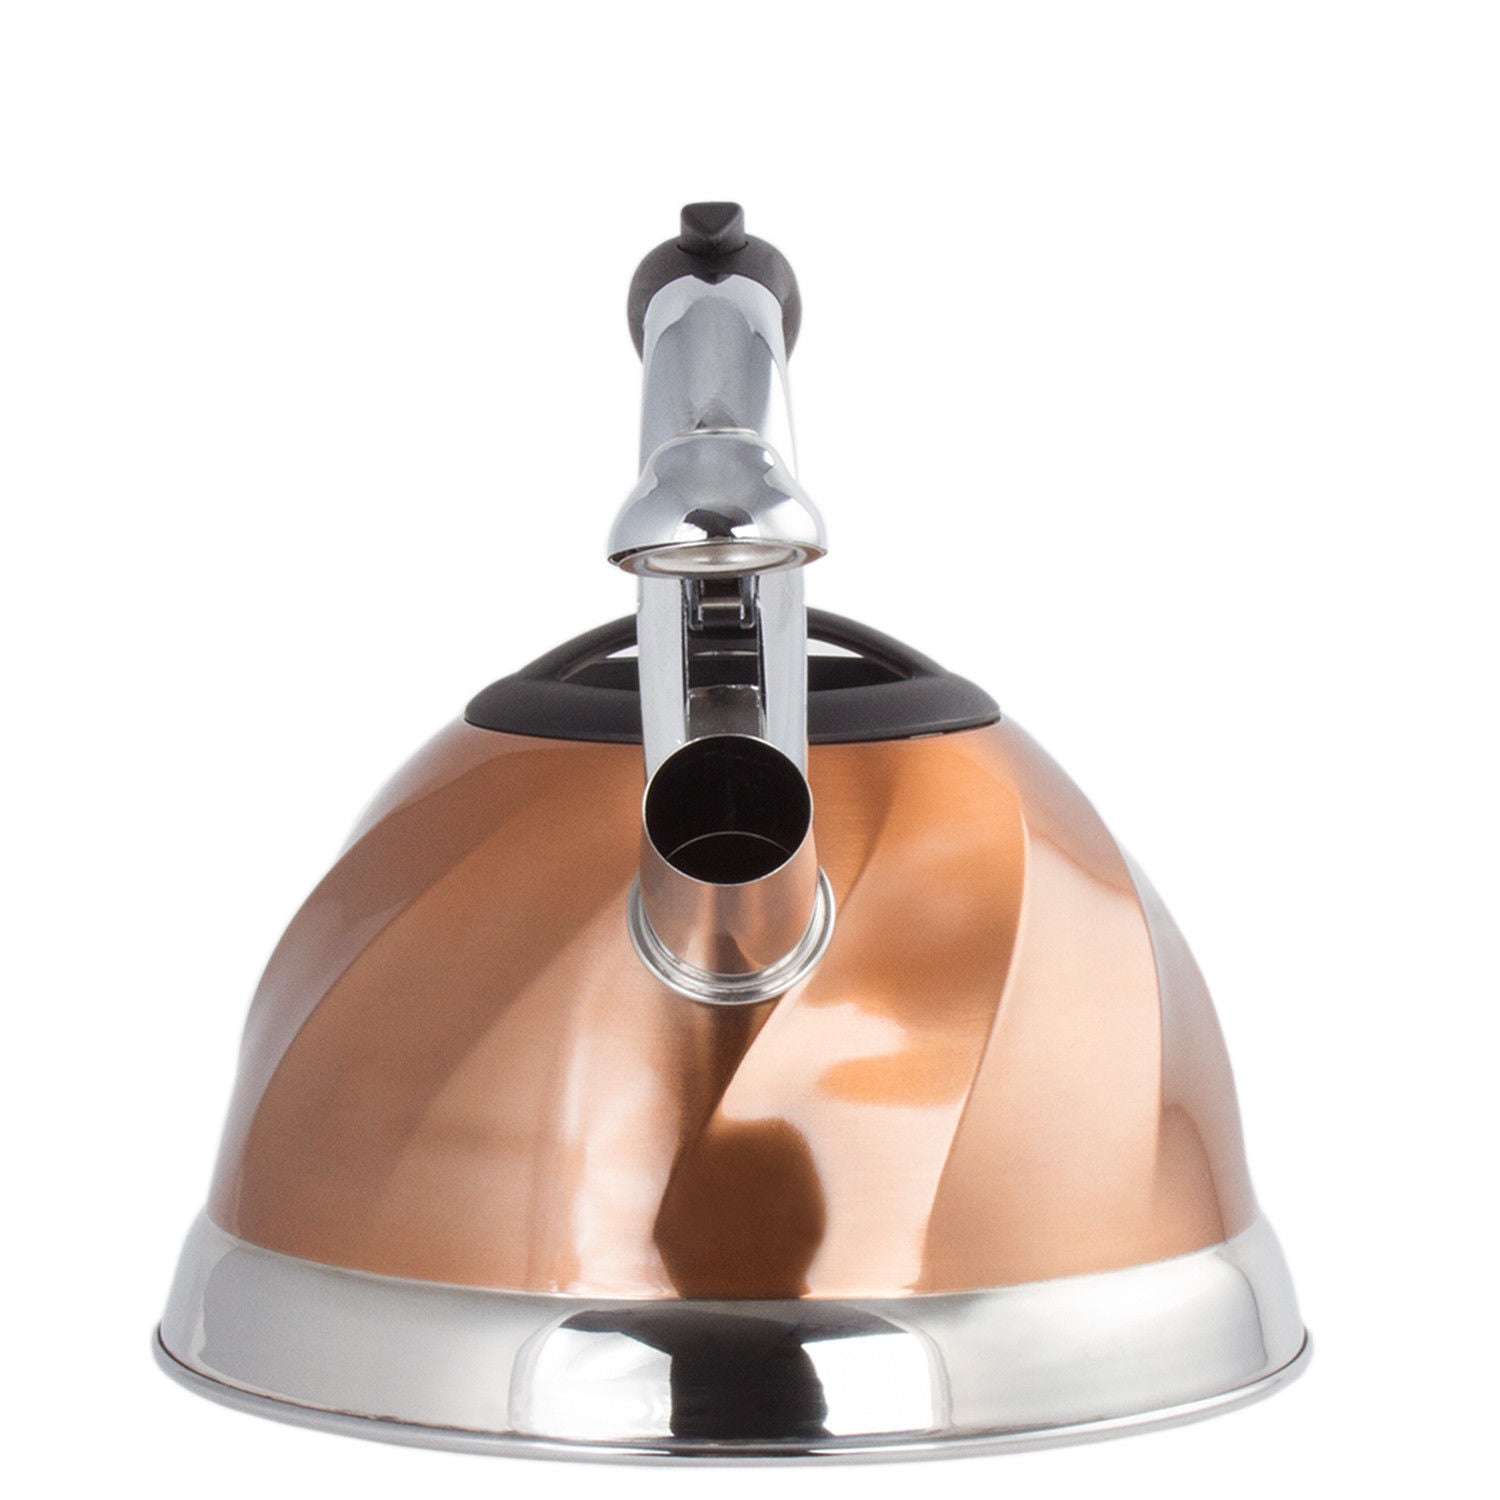 Copper Stainless Steel Whistling Tea Kettle - Tea Maker Pot 3 Quarts 2.8 L.